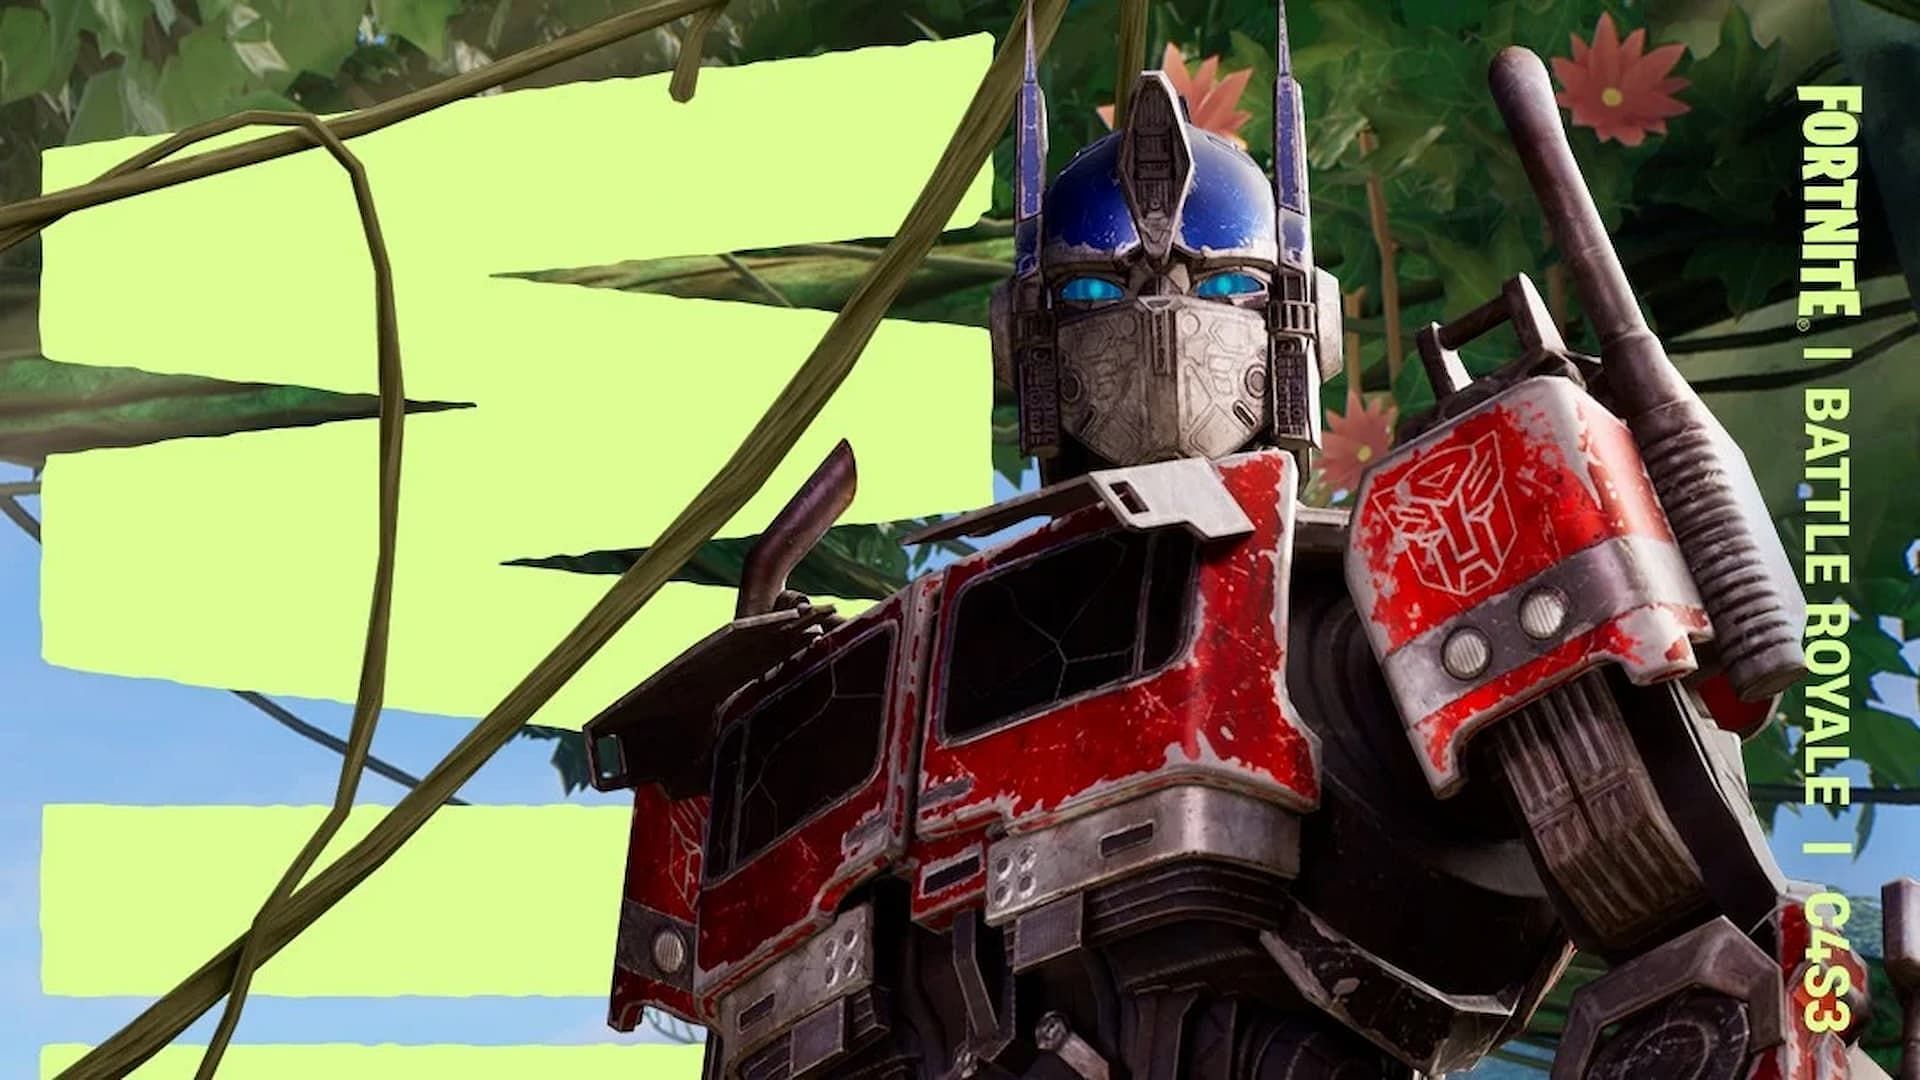 The Optimus Prime Fortnite Skin (Image via Epic Games)